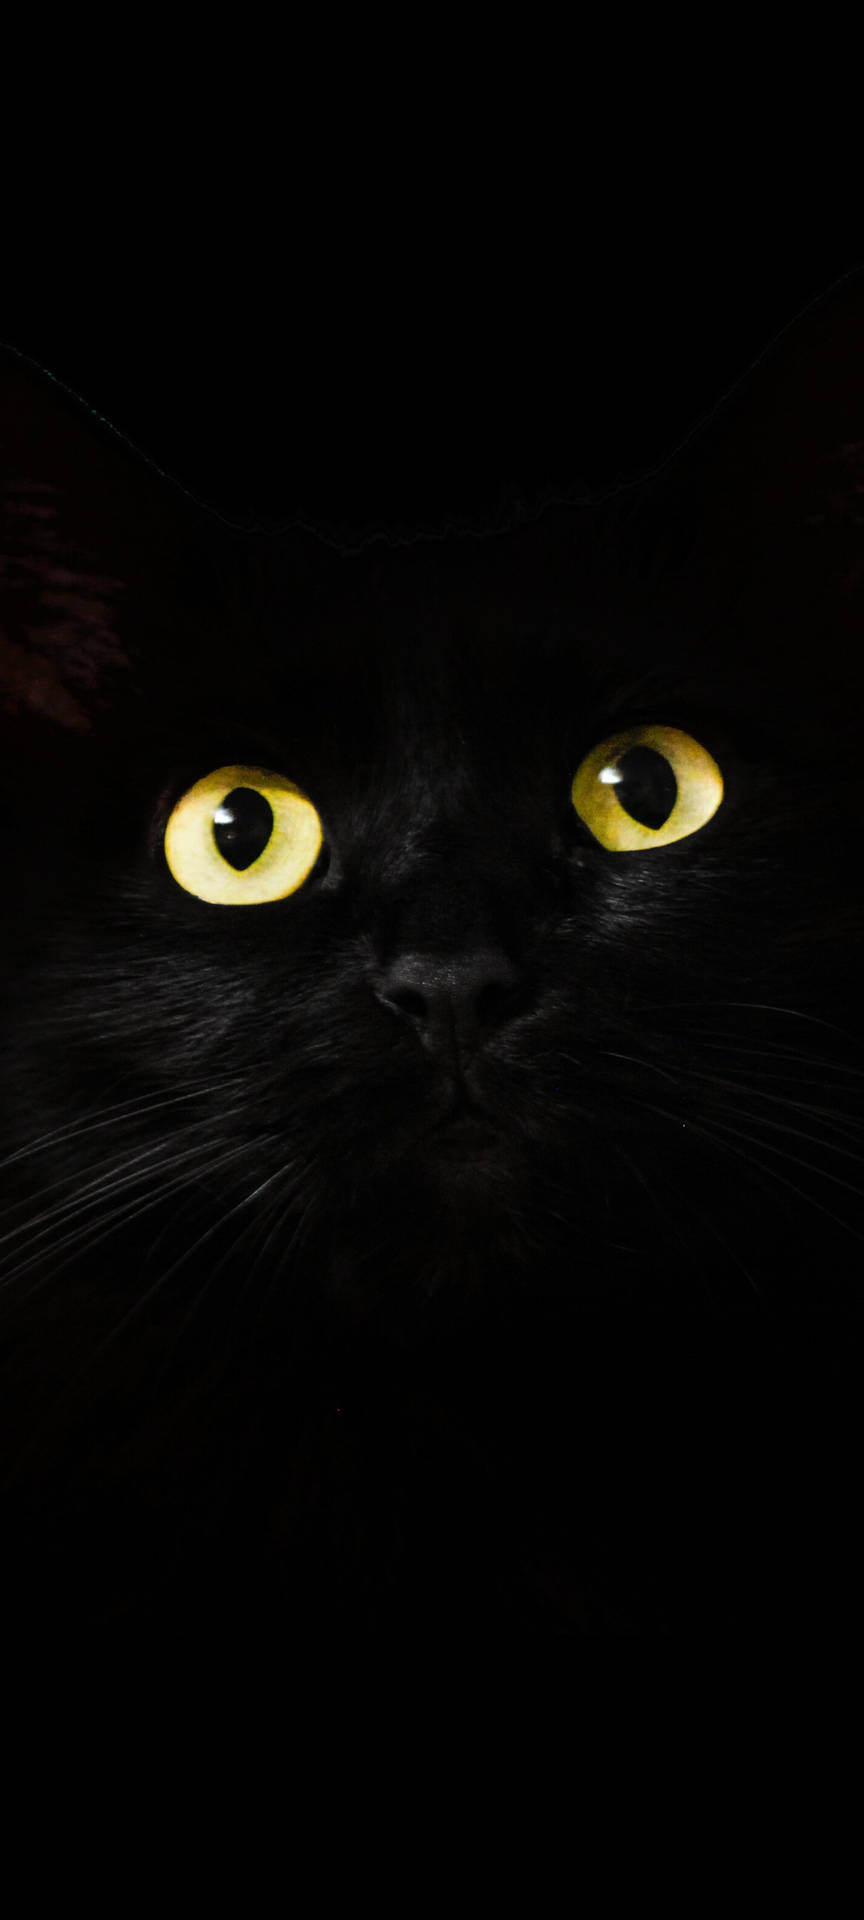 Note 10 Plus Black Cat Background